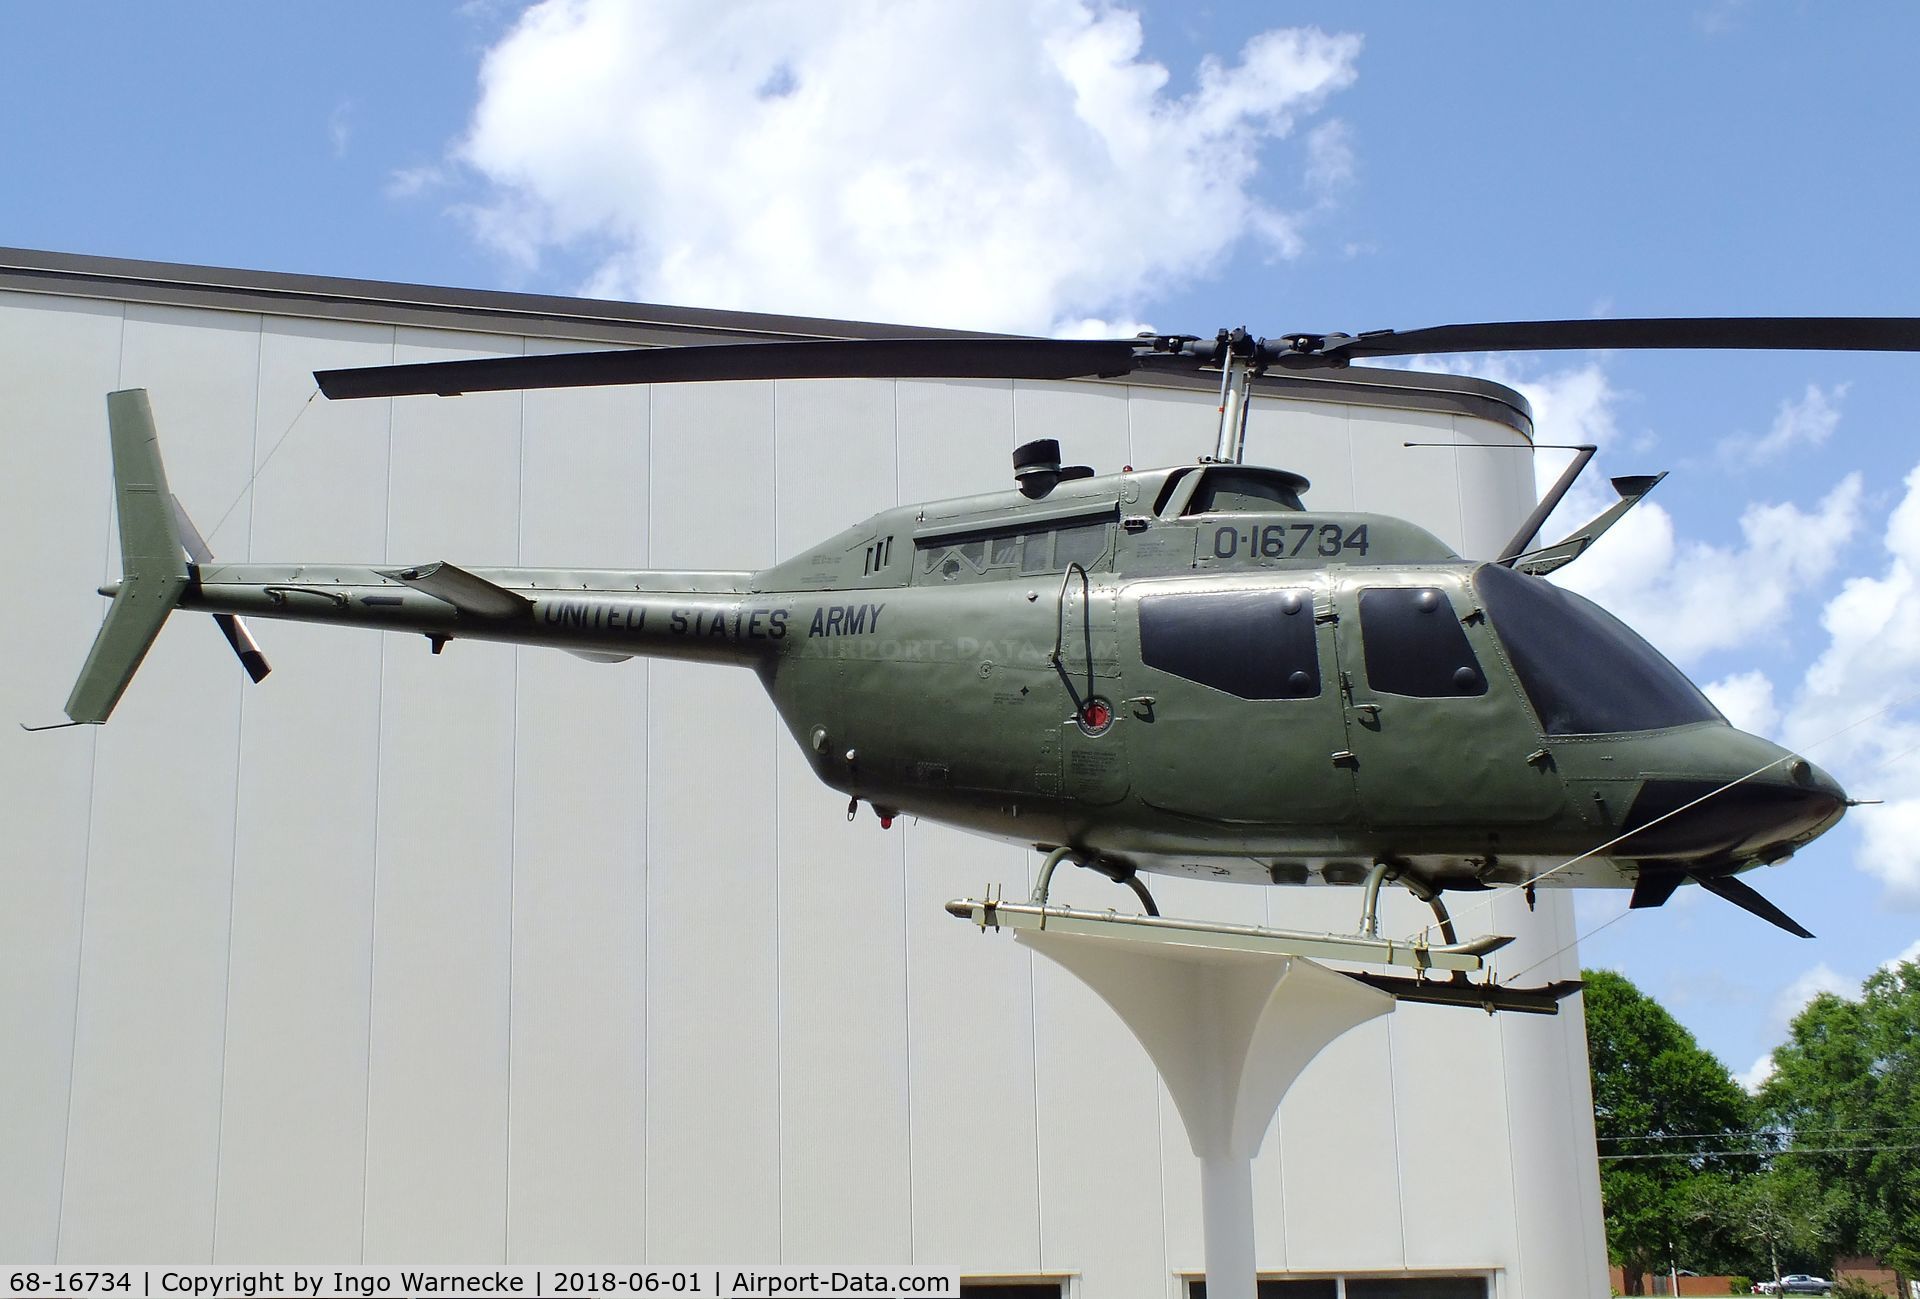 68-16734, 1968 Bell OH-58C Kiowa C/N 40048, Bell OH-58C Kiowa at the US Army Aviation Museum, Ft. Rucker